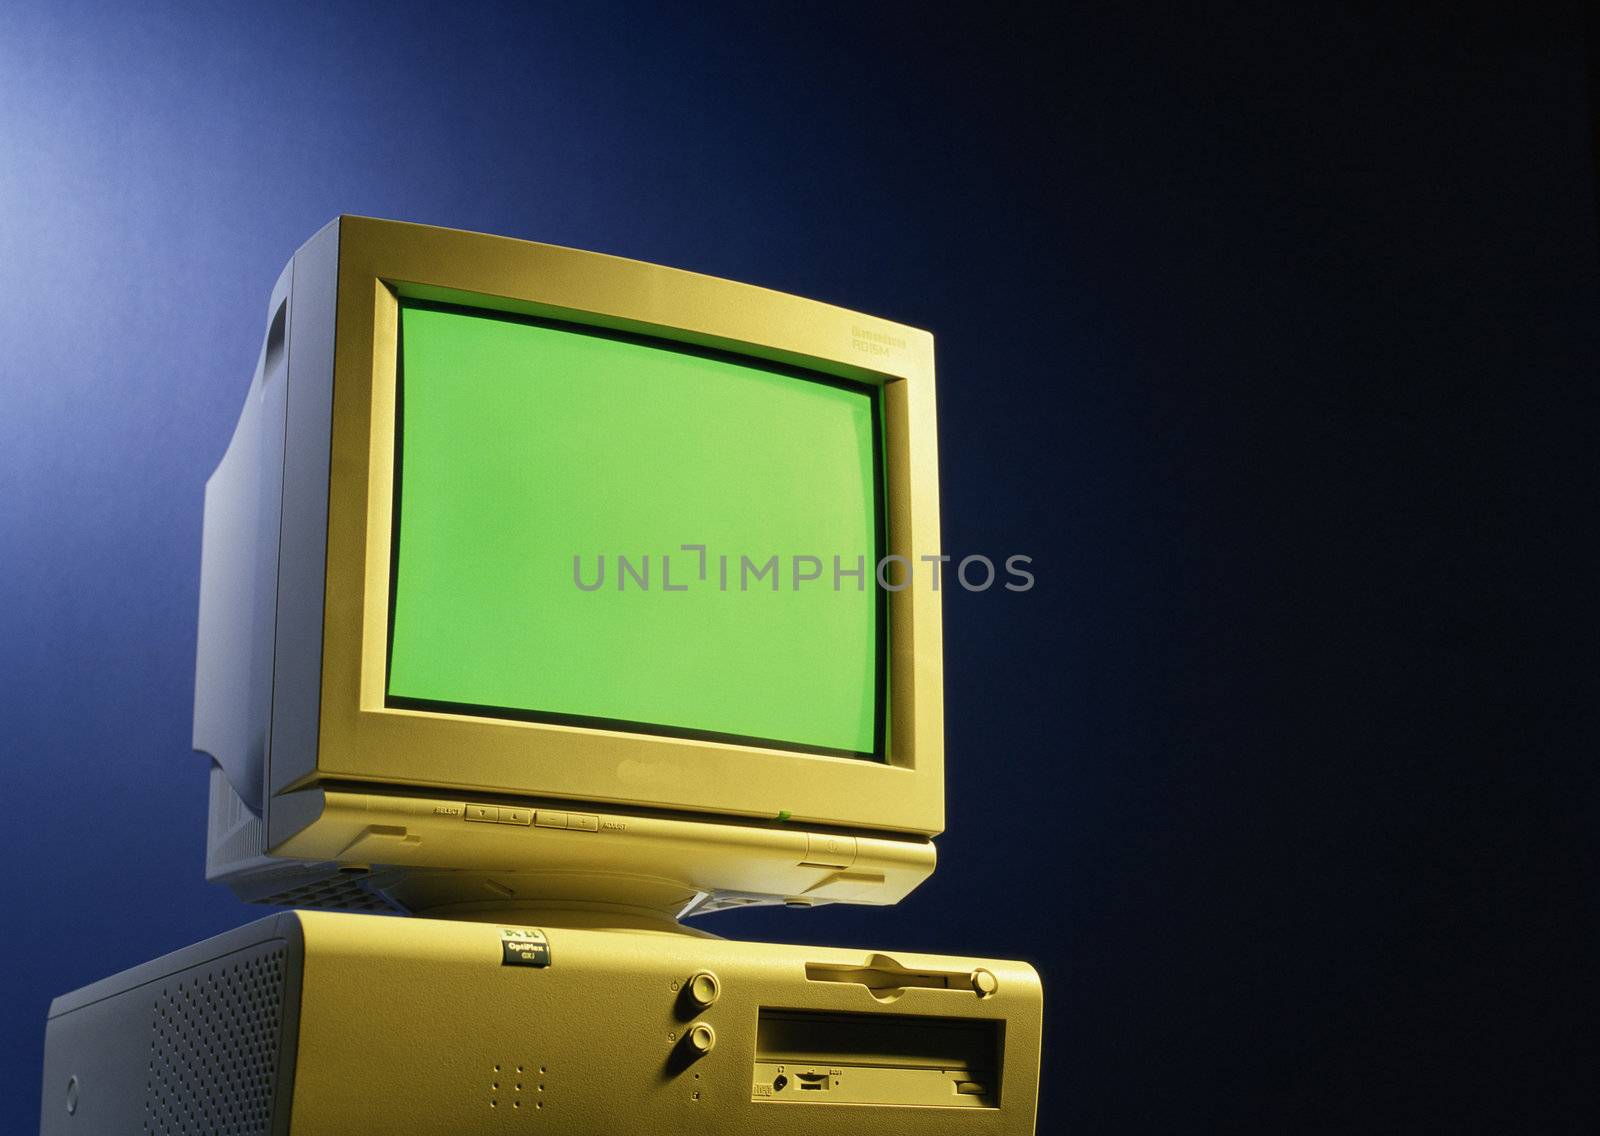 Apple Macintosh Computer